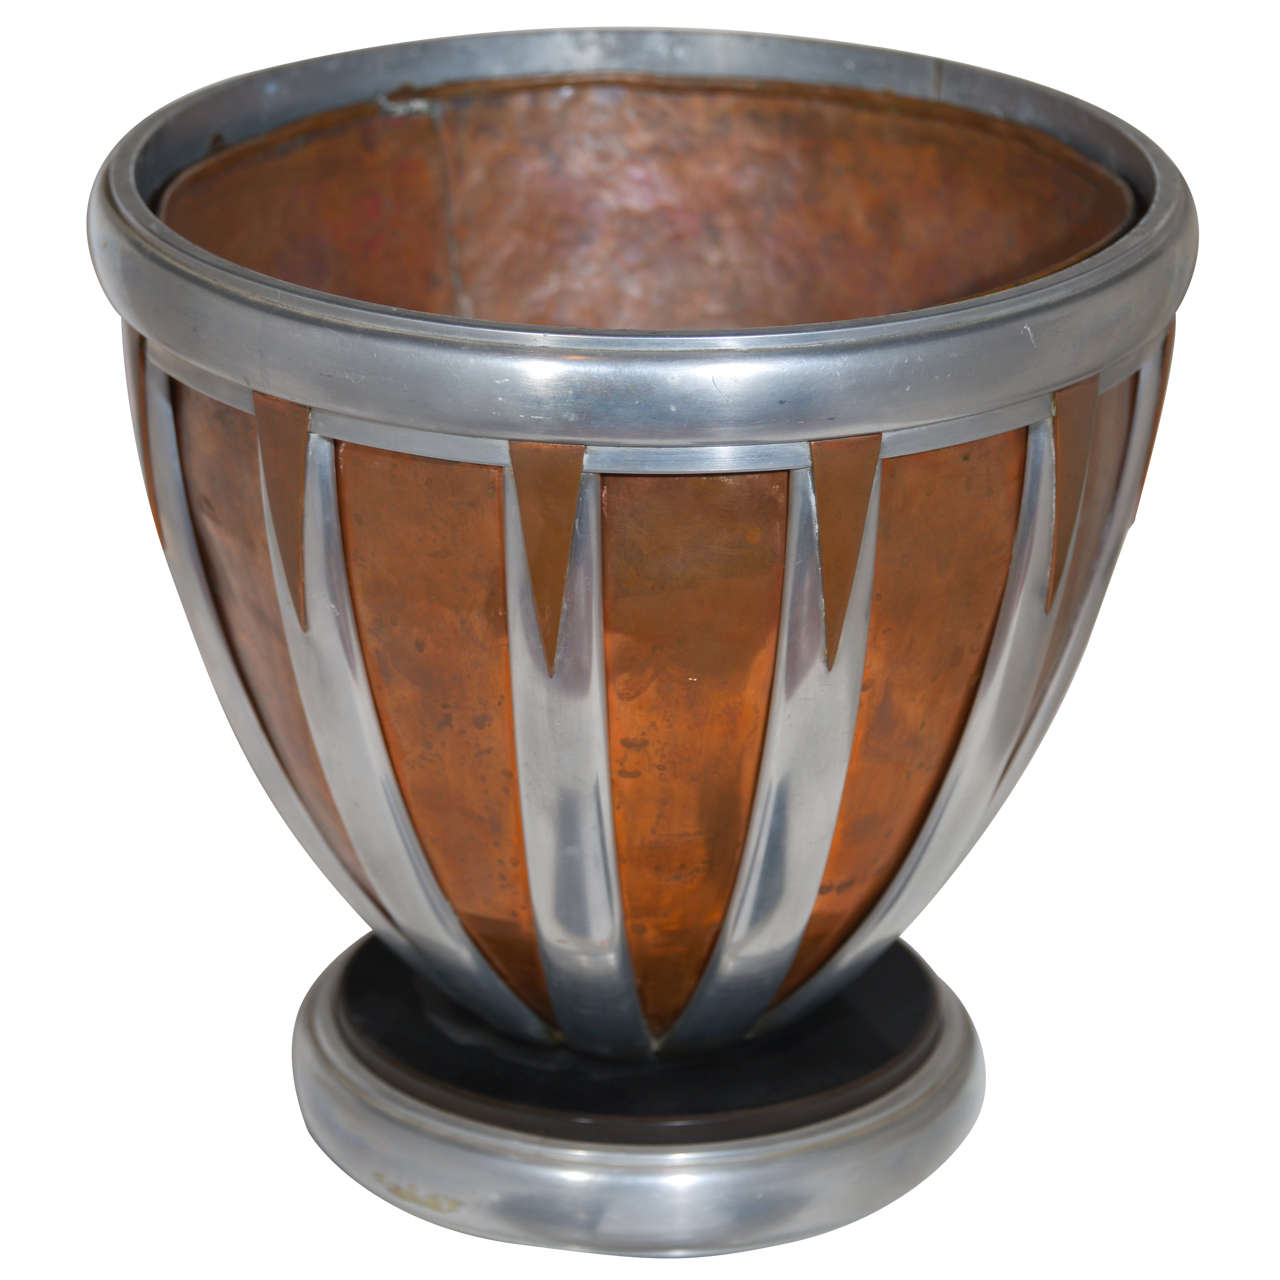 Machine Age Art Deco Mixed Metal Hand Wrought Vessel Vase Centerpiece